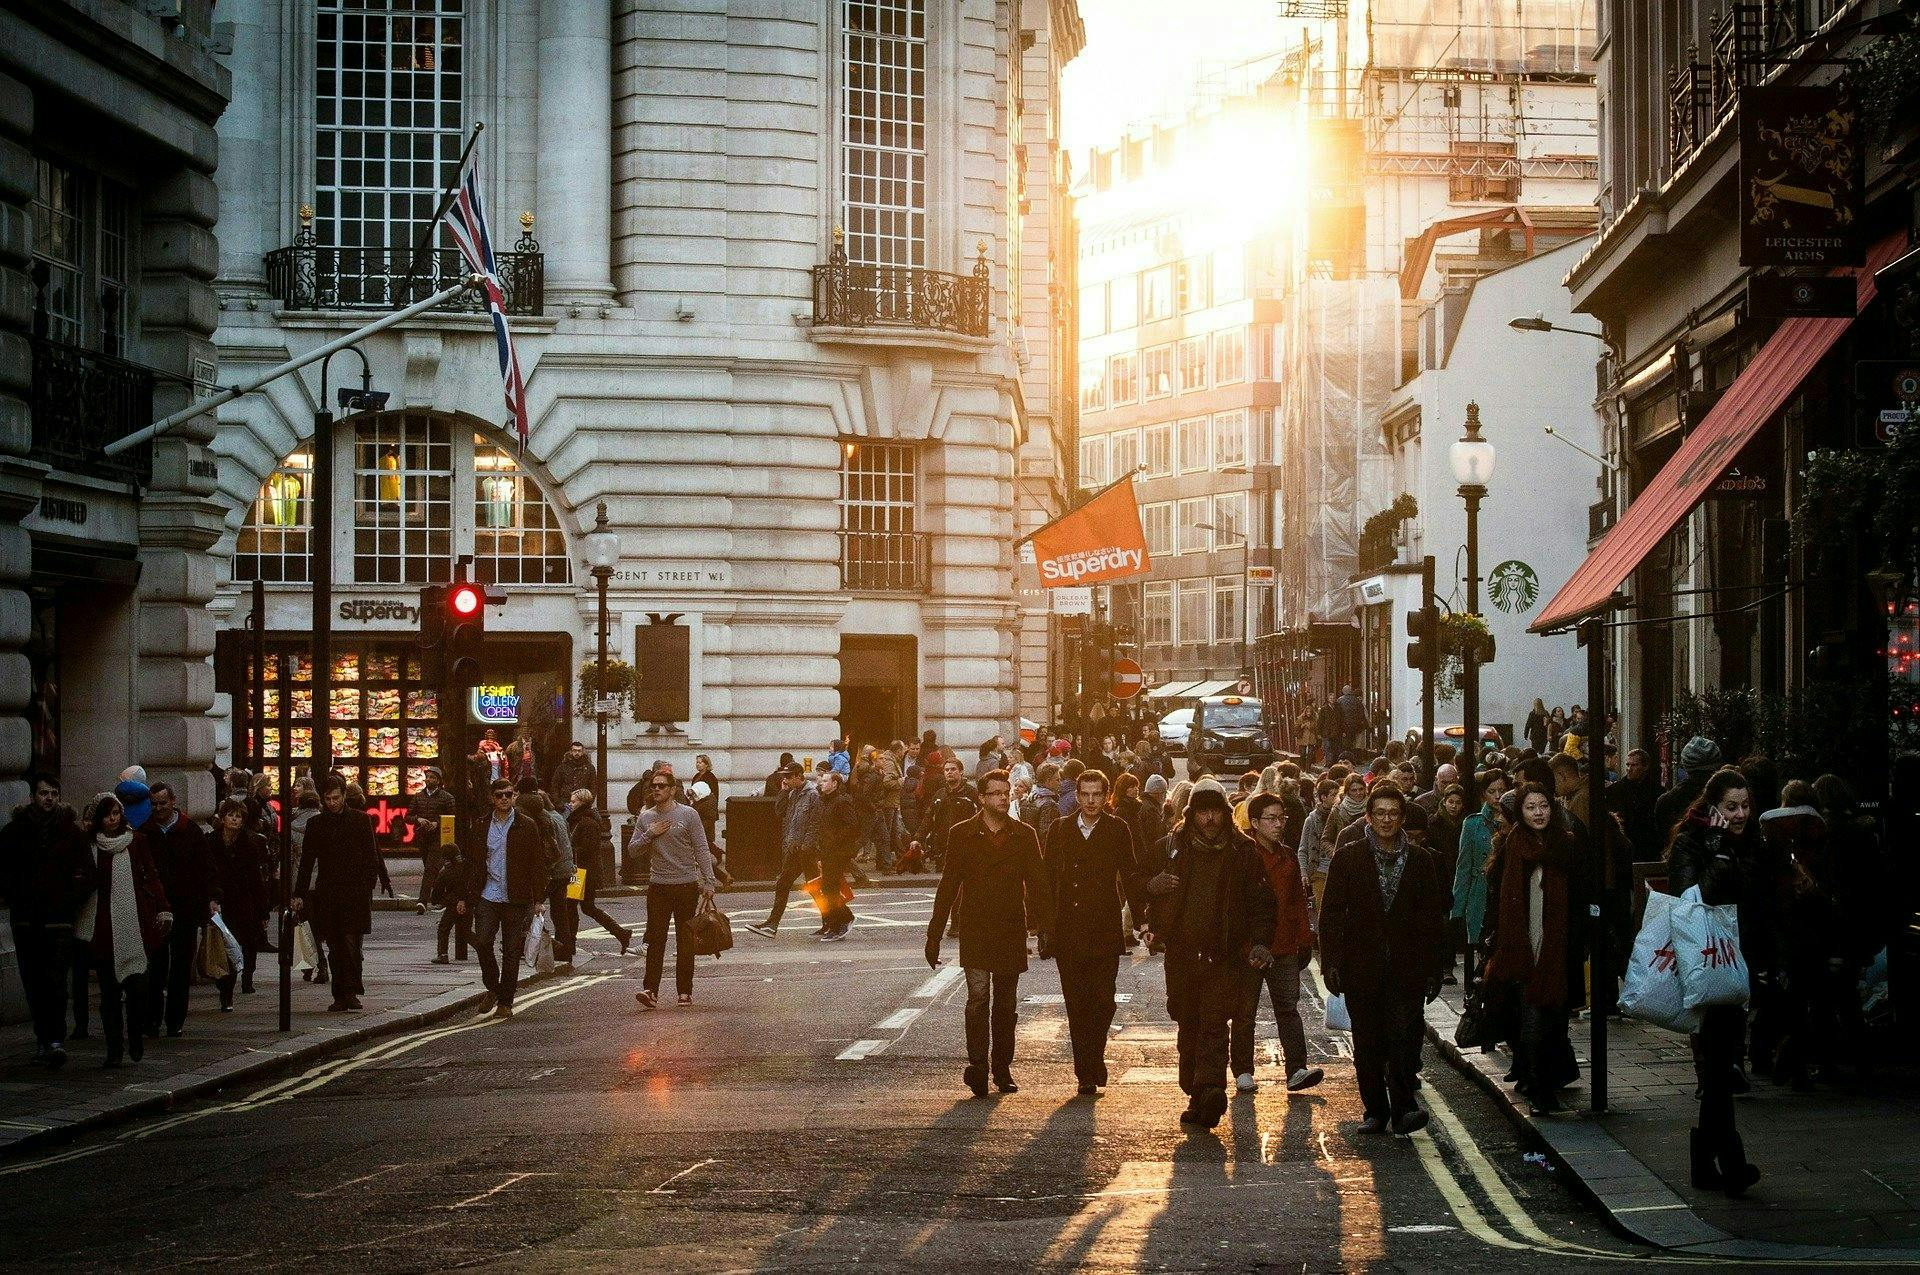 urban sunset with people walking